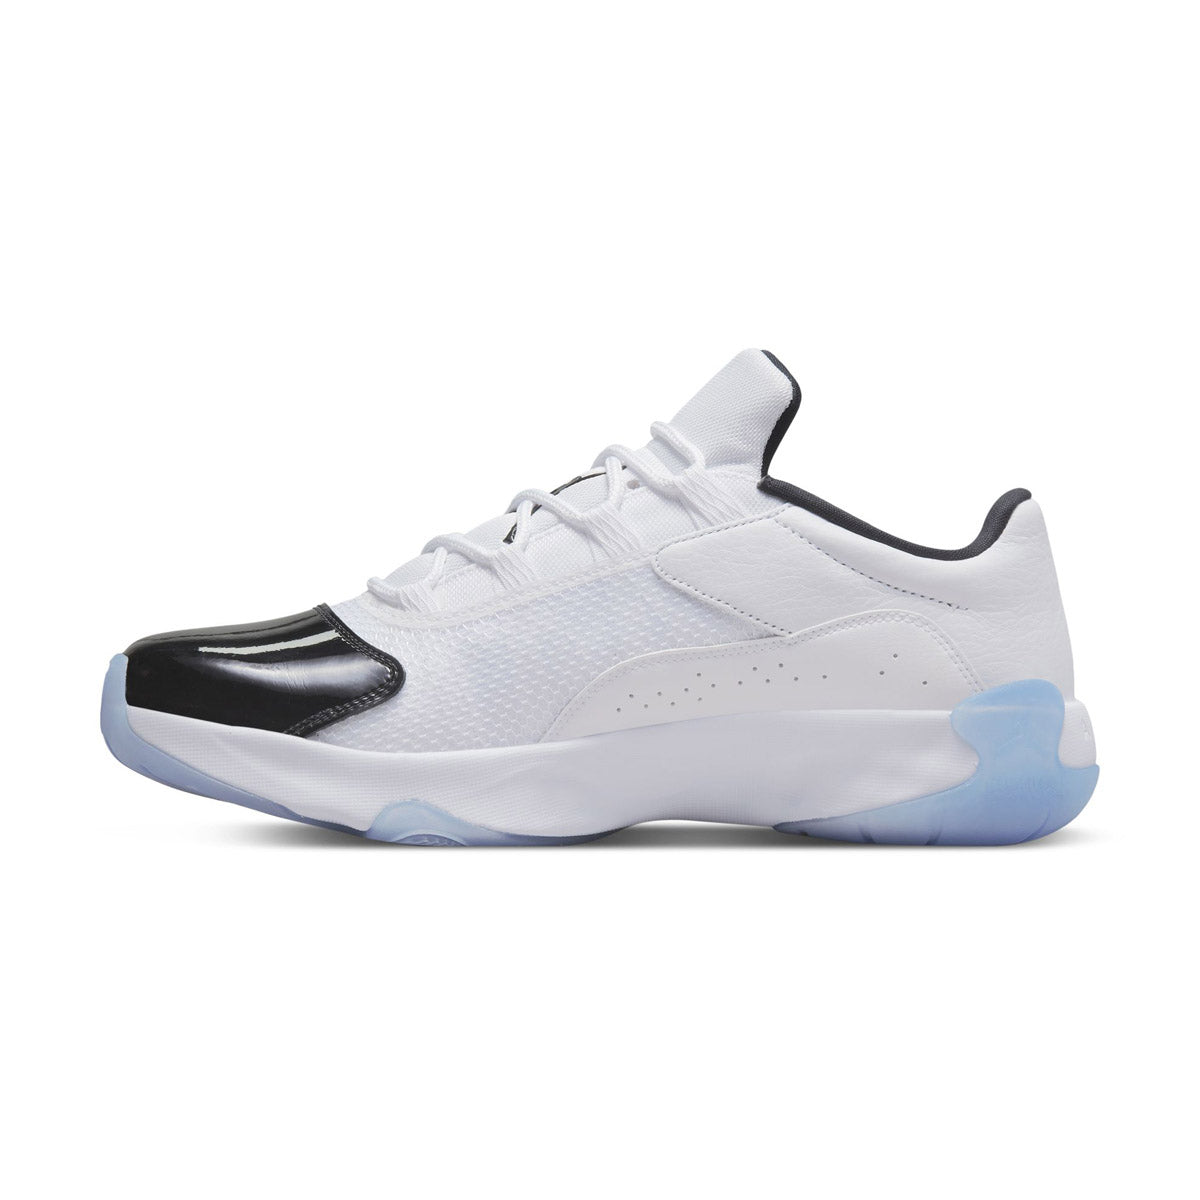 Nike Air Jordan 11 Low CMFT Concord White Black DV2207-100 Men’s Shoes NEW